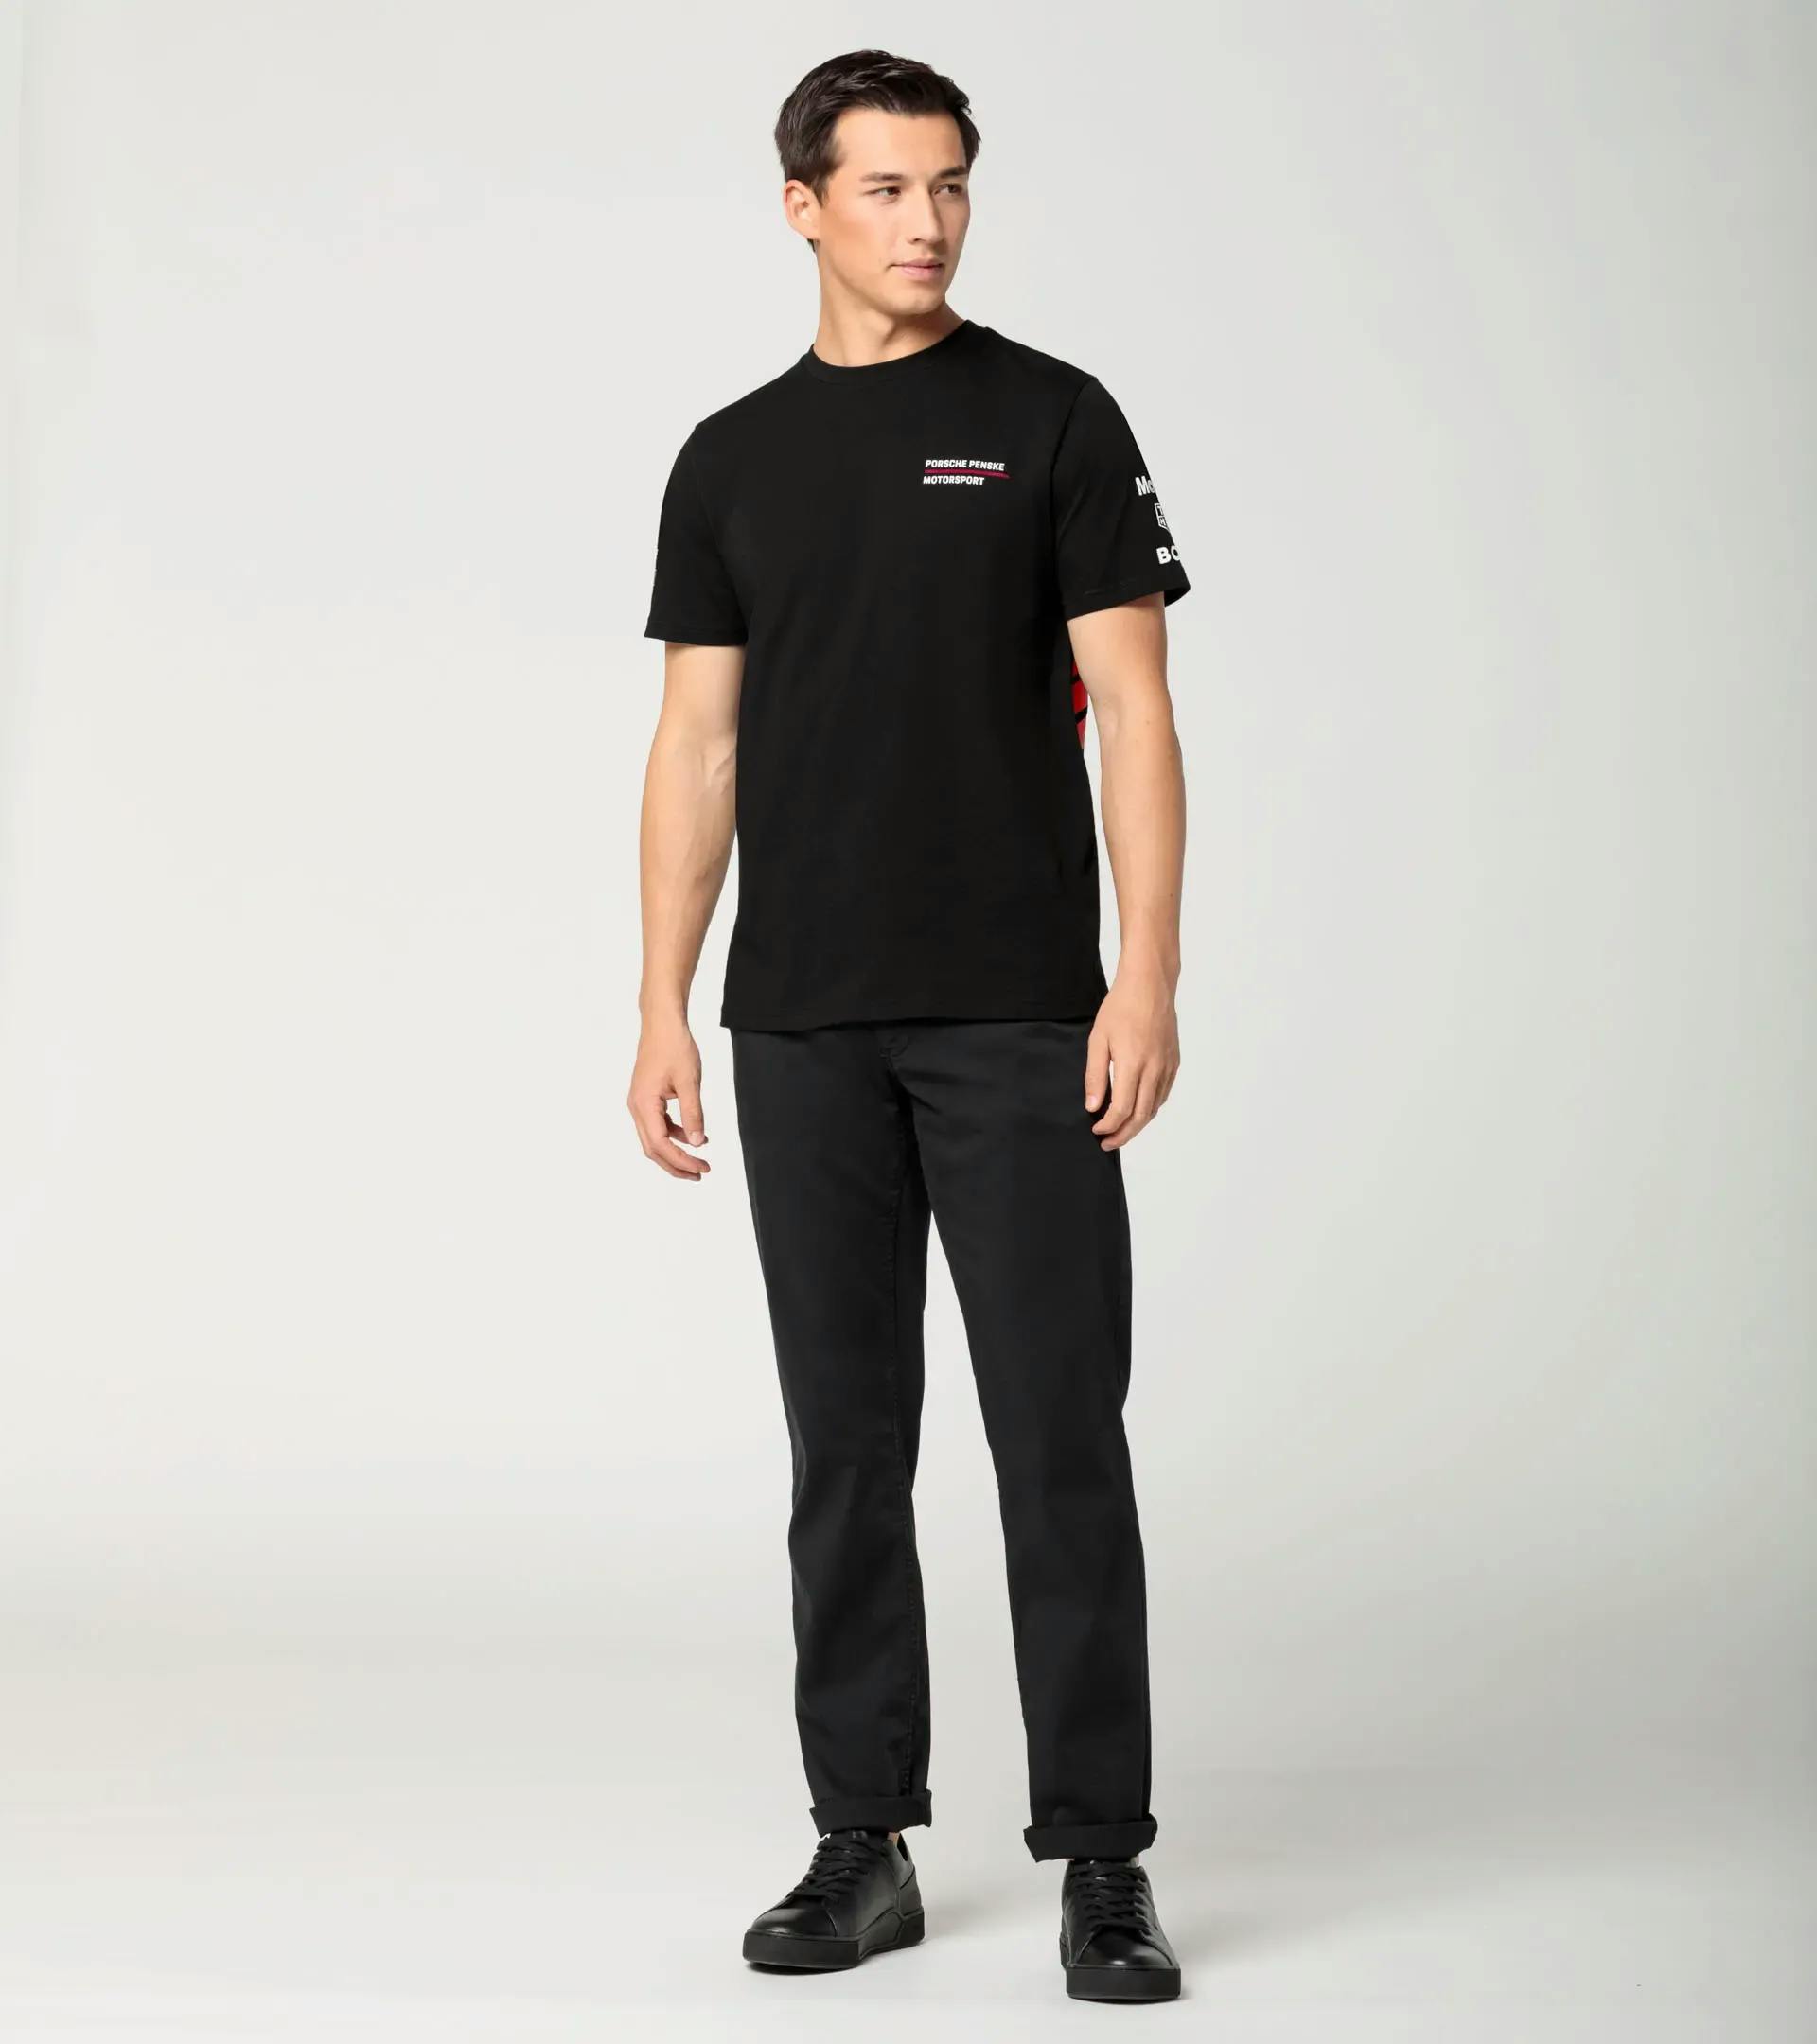 T-shirt unisex – Porsche Penske Motorsport 6